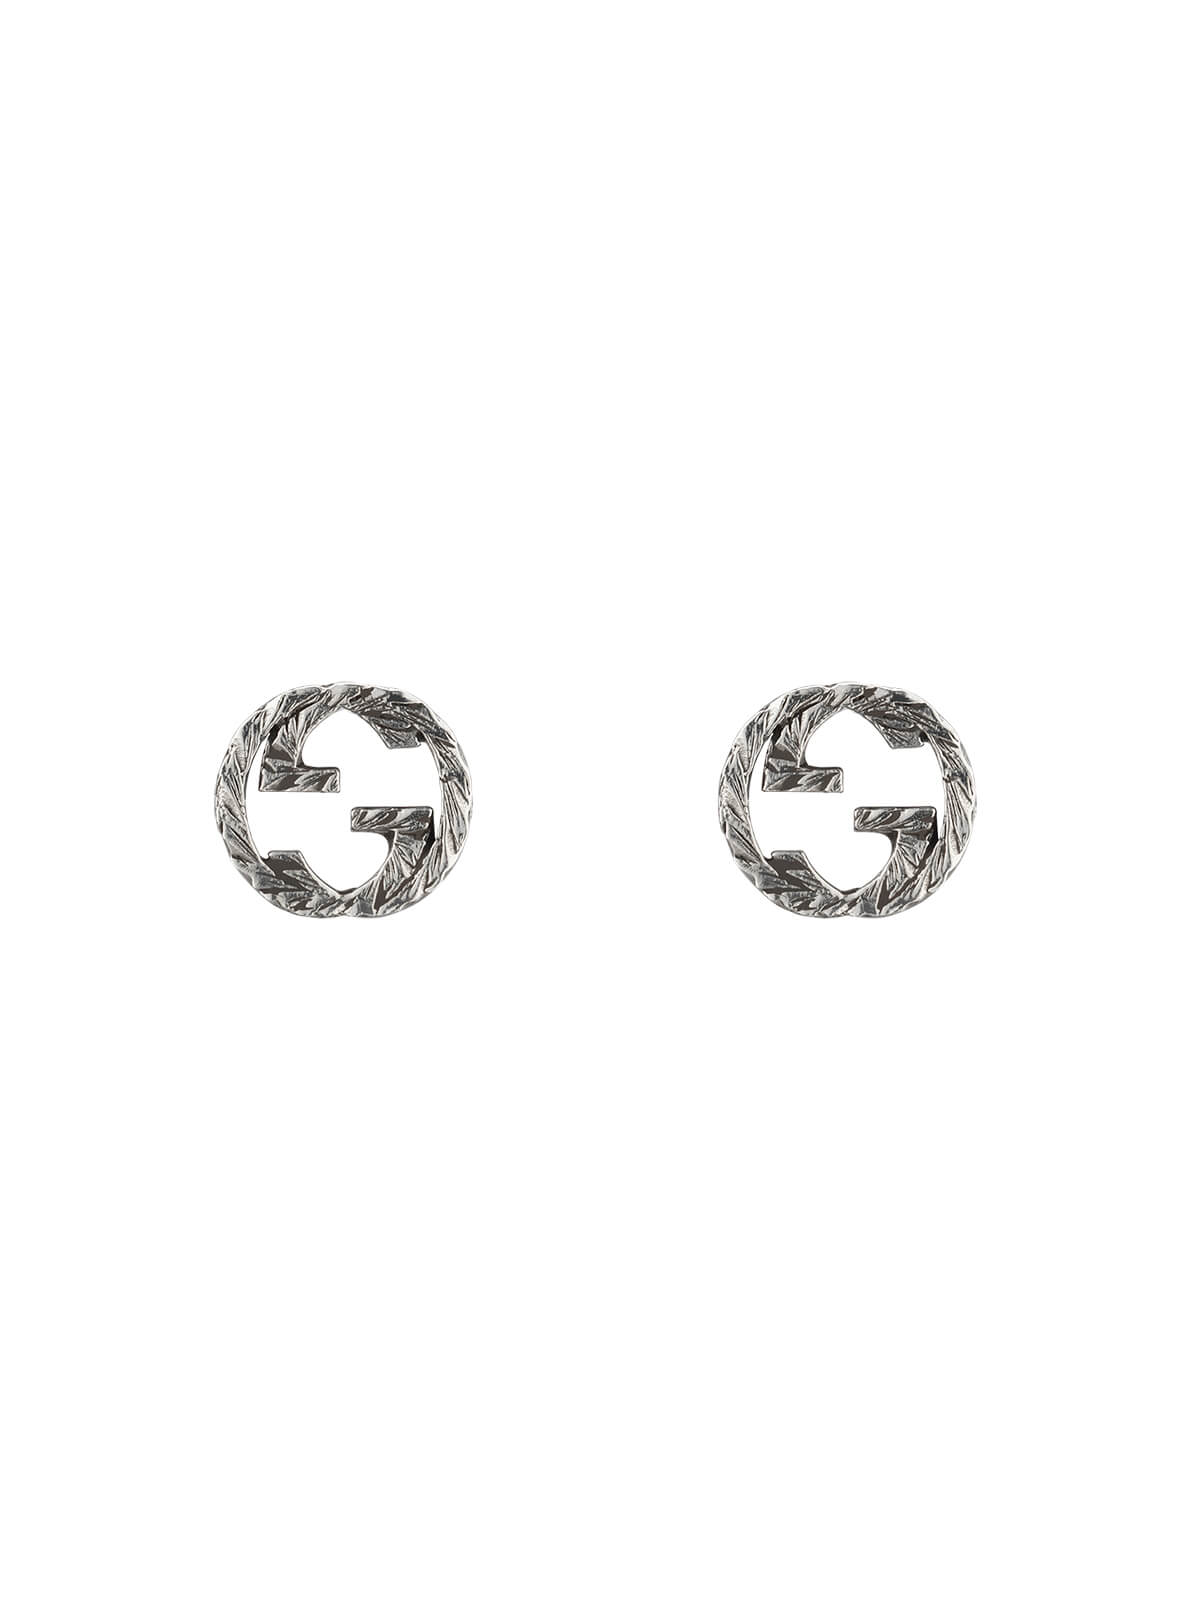 Gucci Interlocking G Earrings in Silver YBD45710900100U